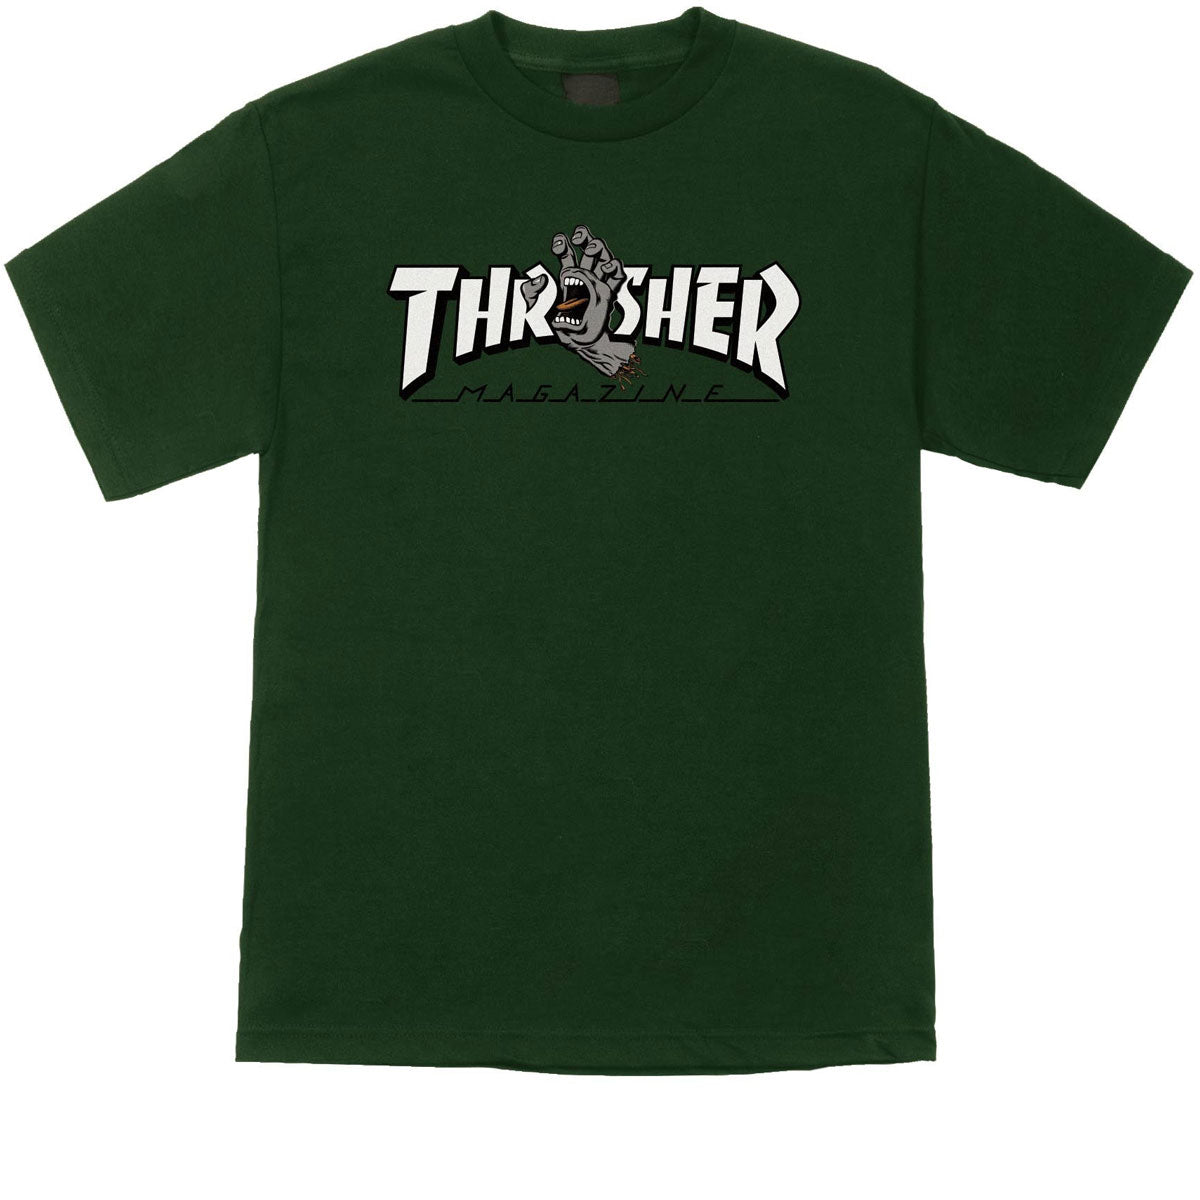 Santa Cruz x Thrasher Screaming Logo T-Shirt - Forest Green image 1